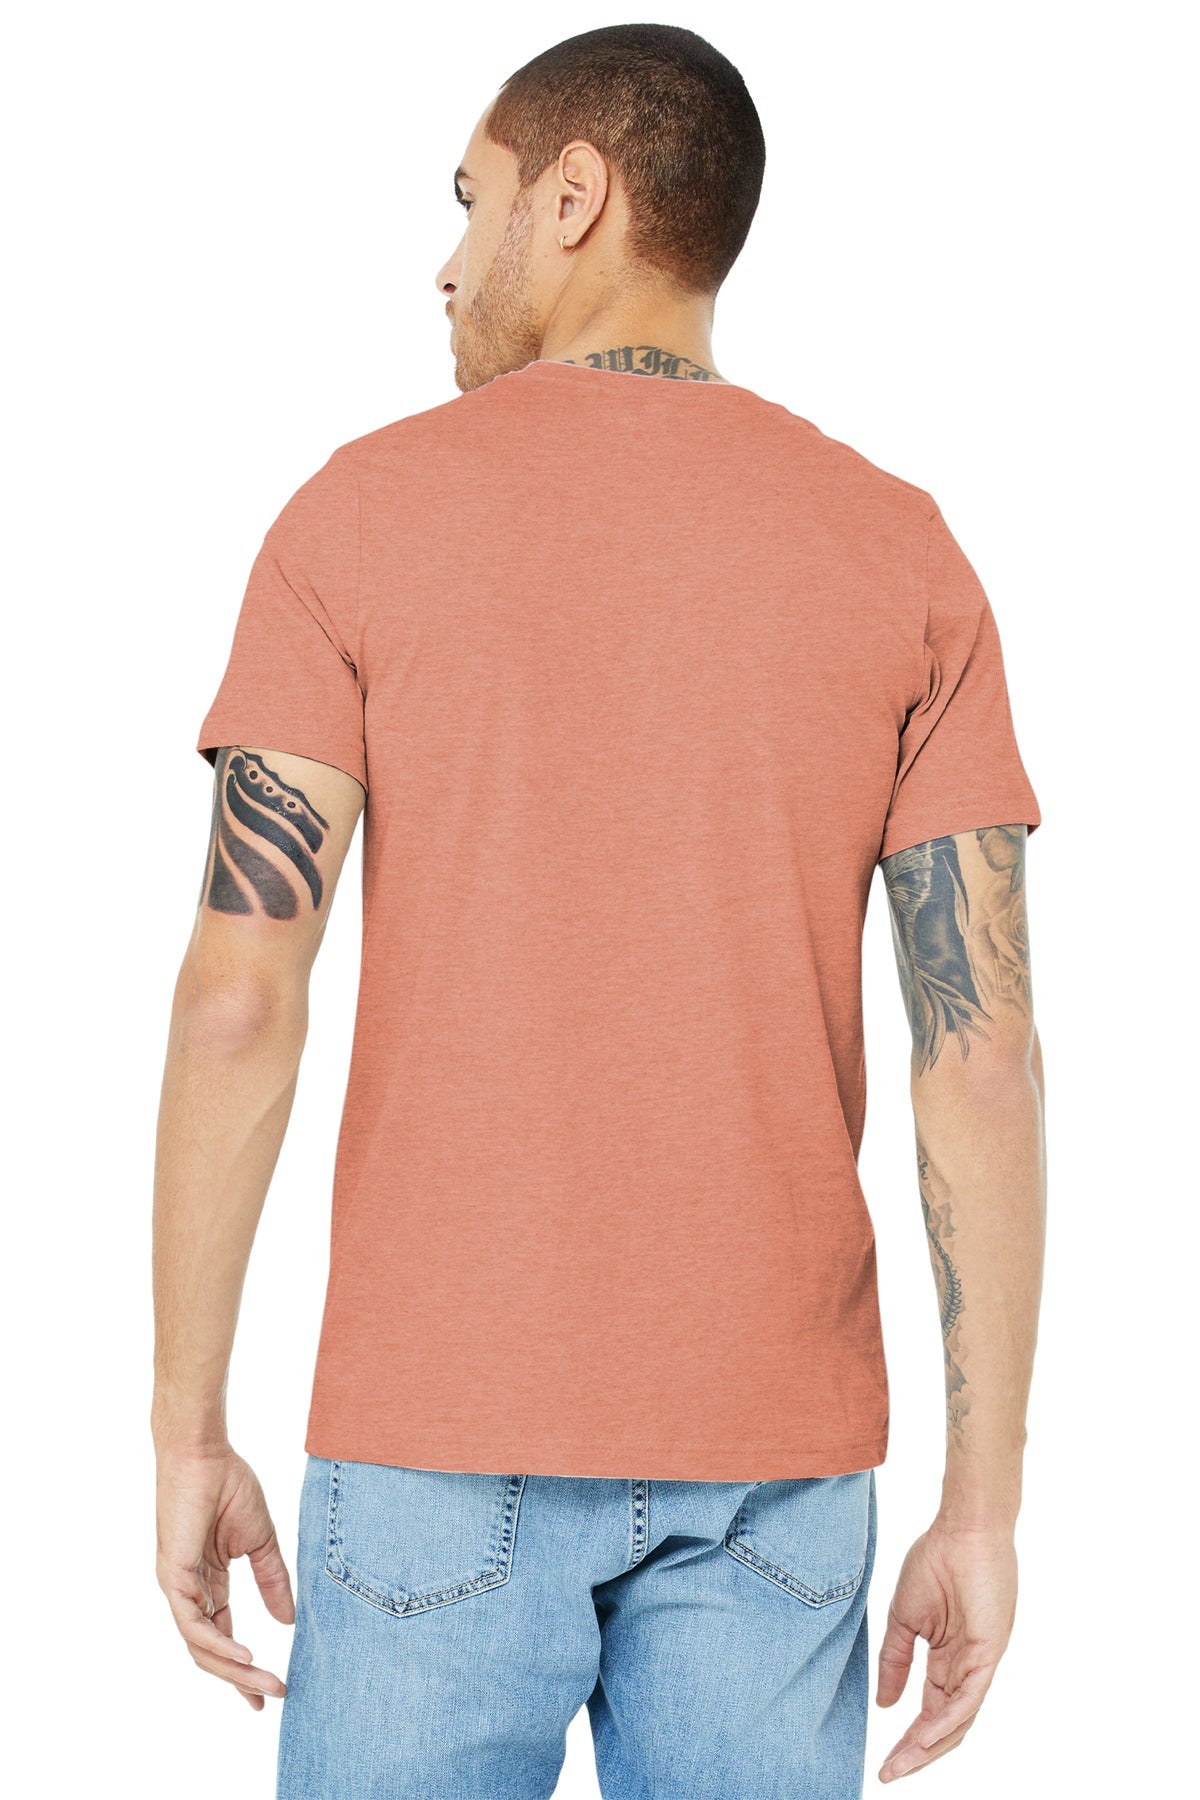 bella + canvas unisex jersey short sleeve t-shirt 3001c heather sunset